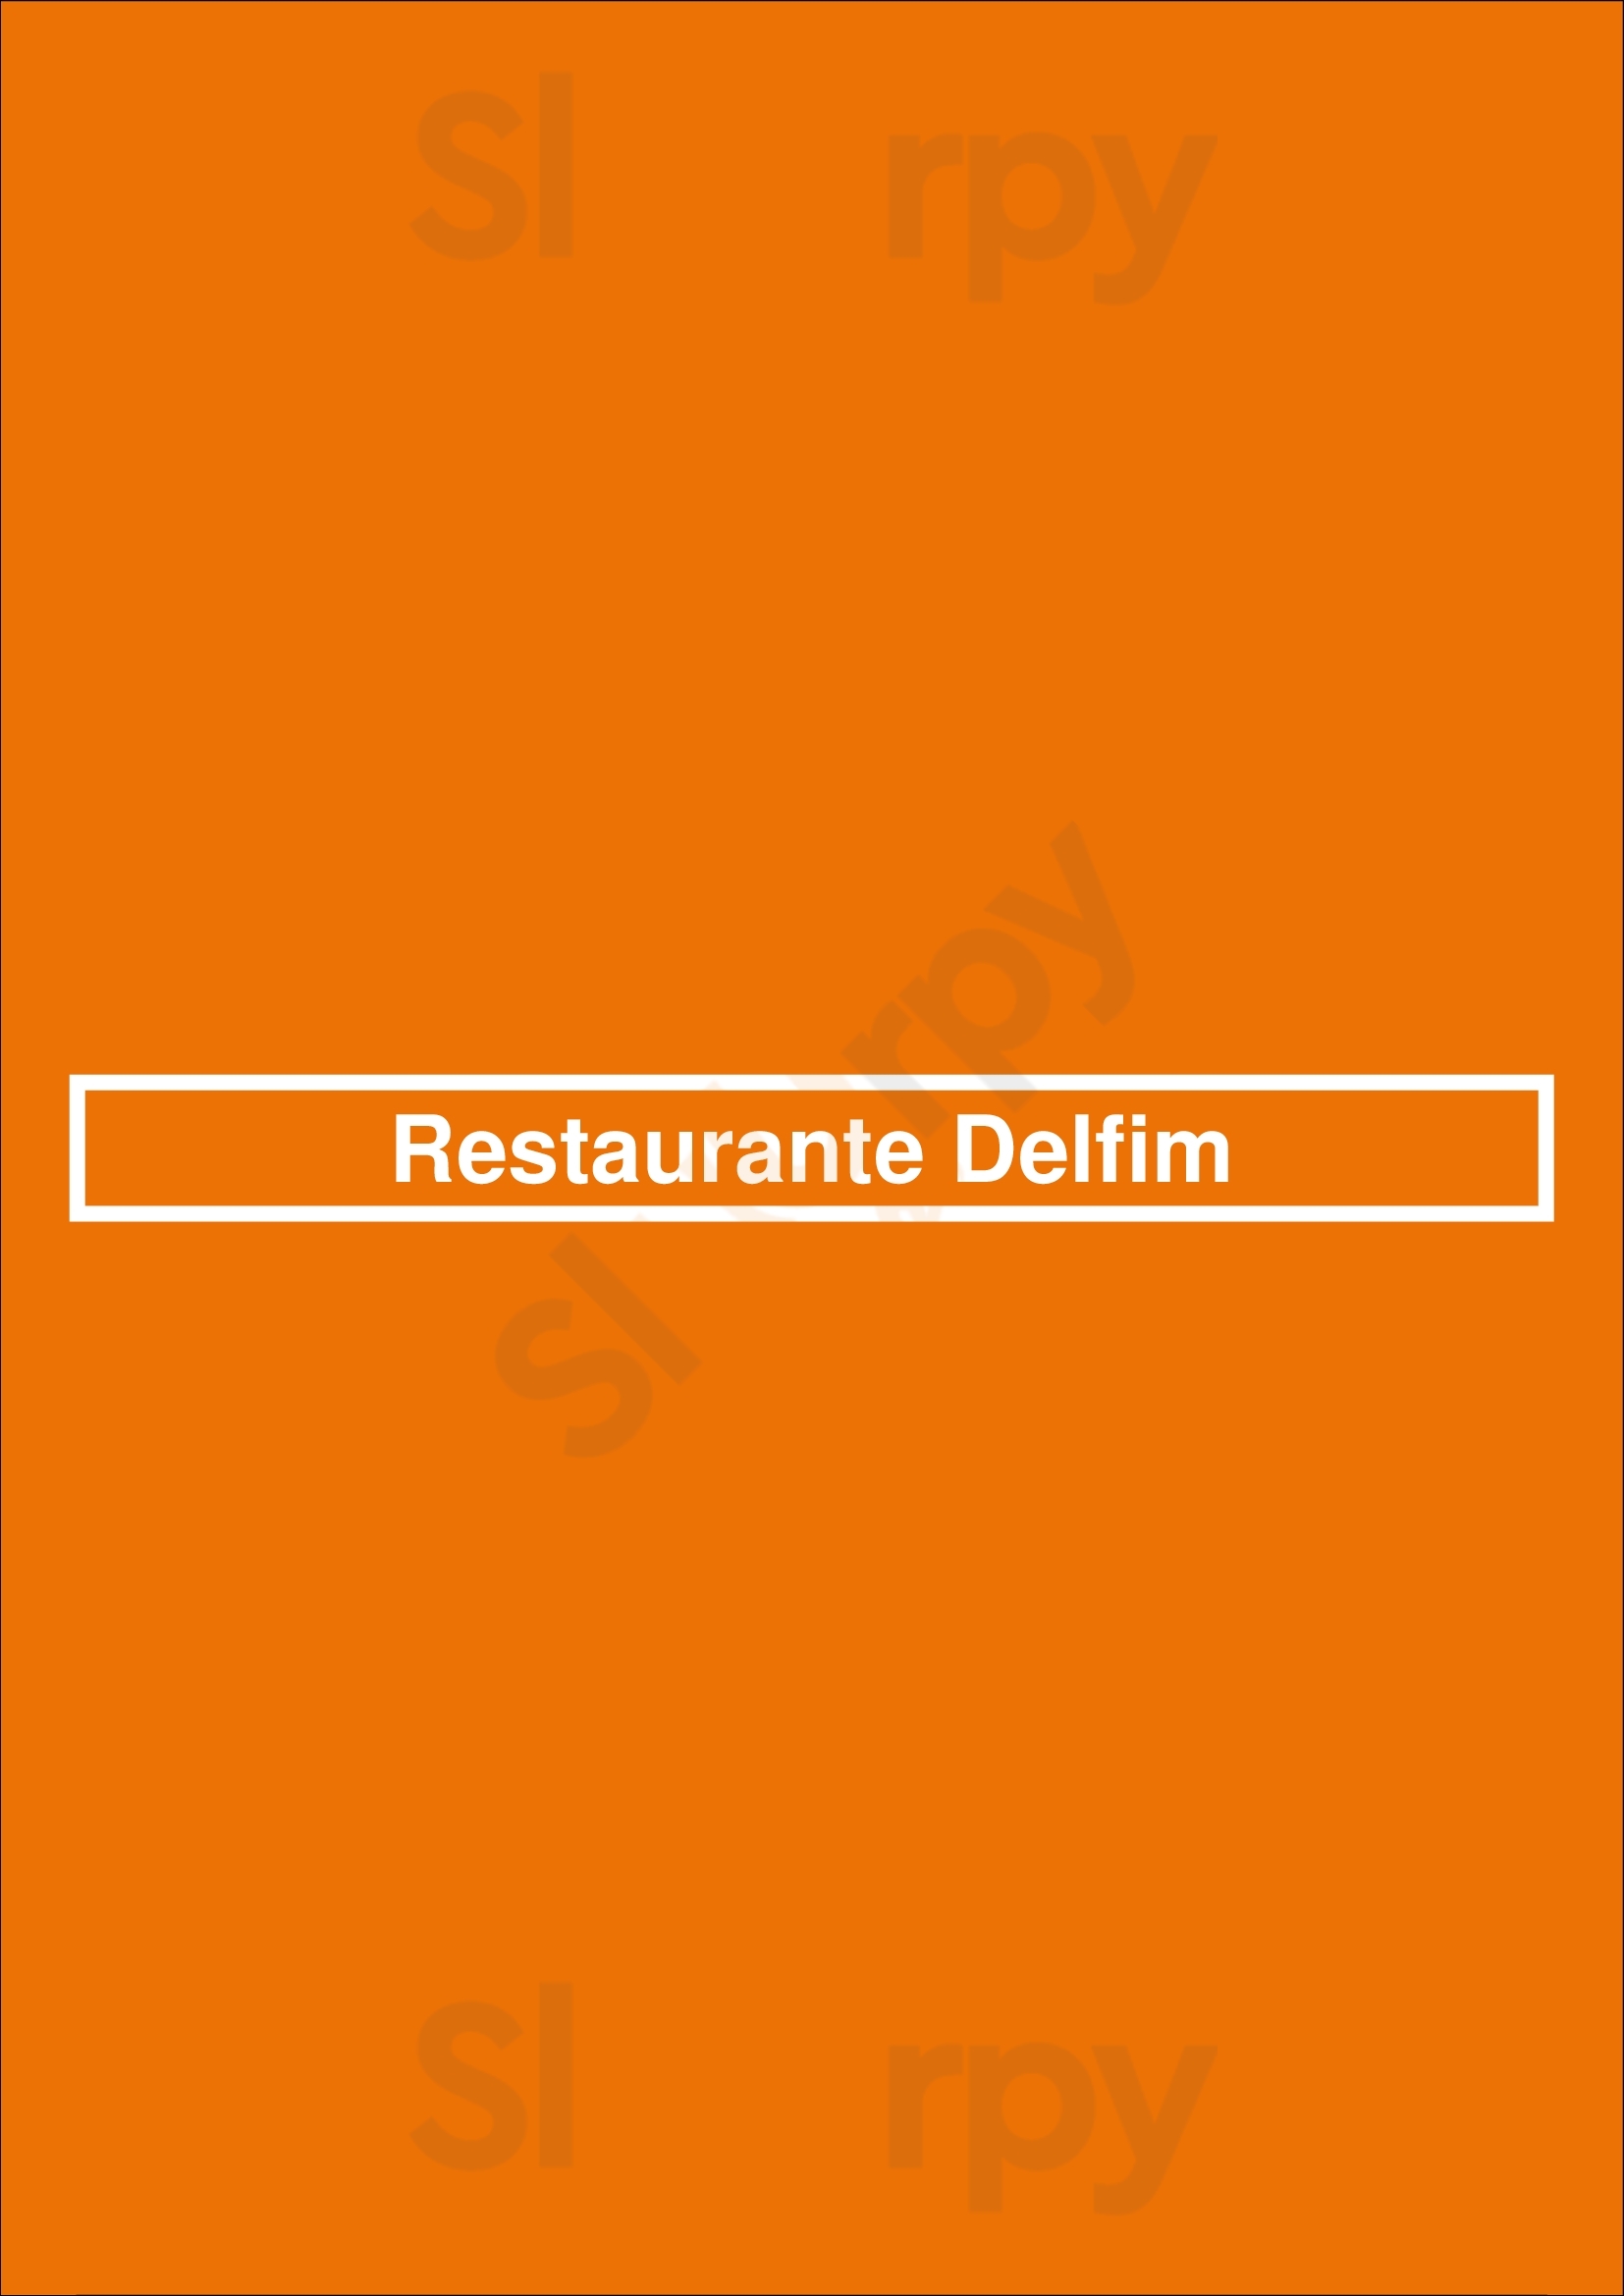 Restaurante Delfim Braga Menu - 1